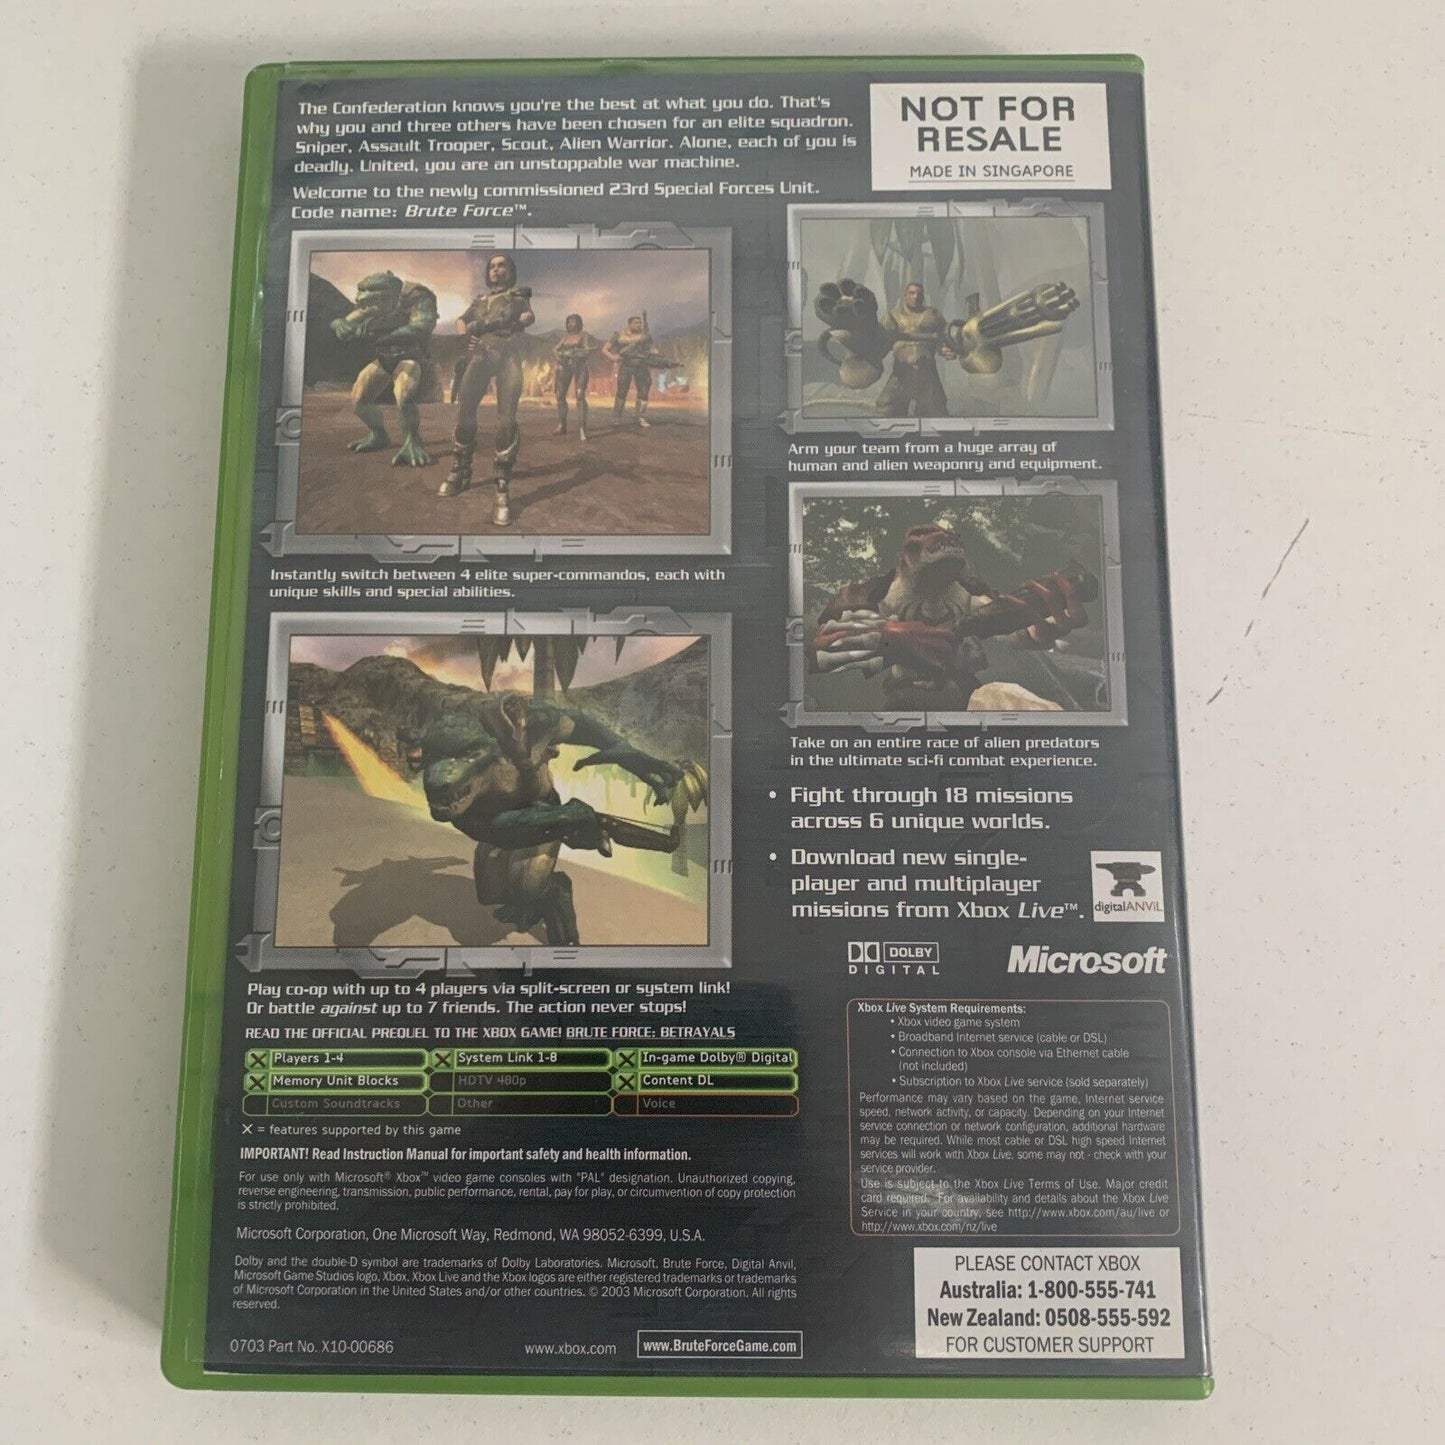 Brute Force Xbox Original Game